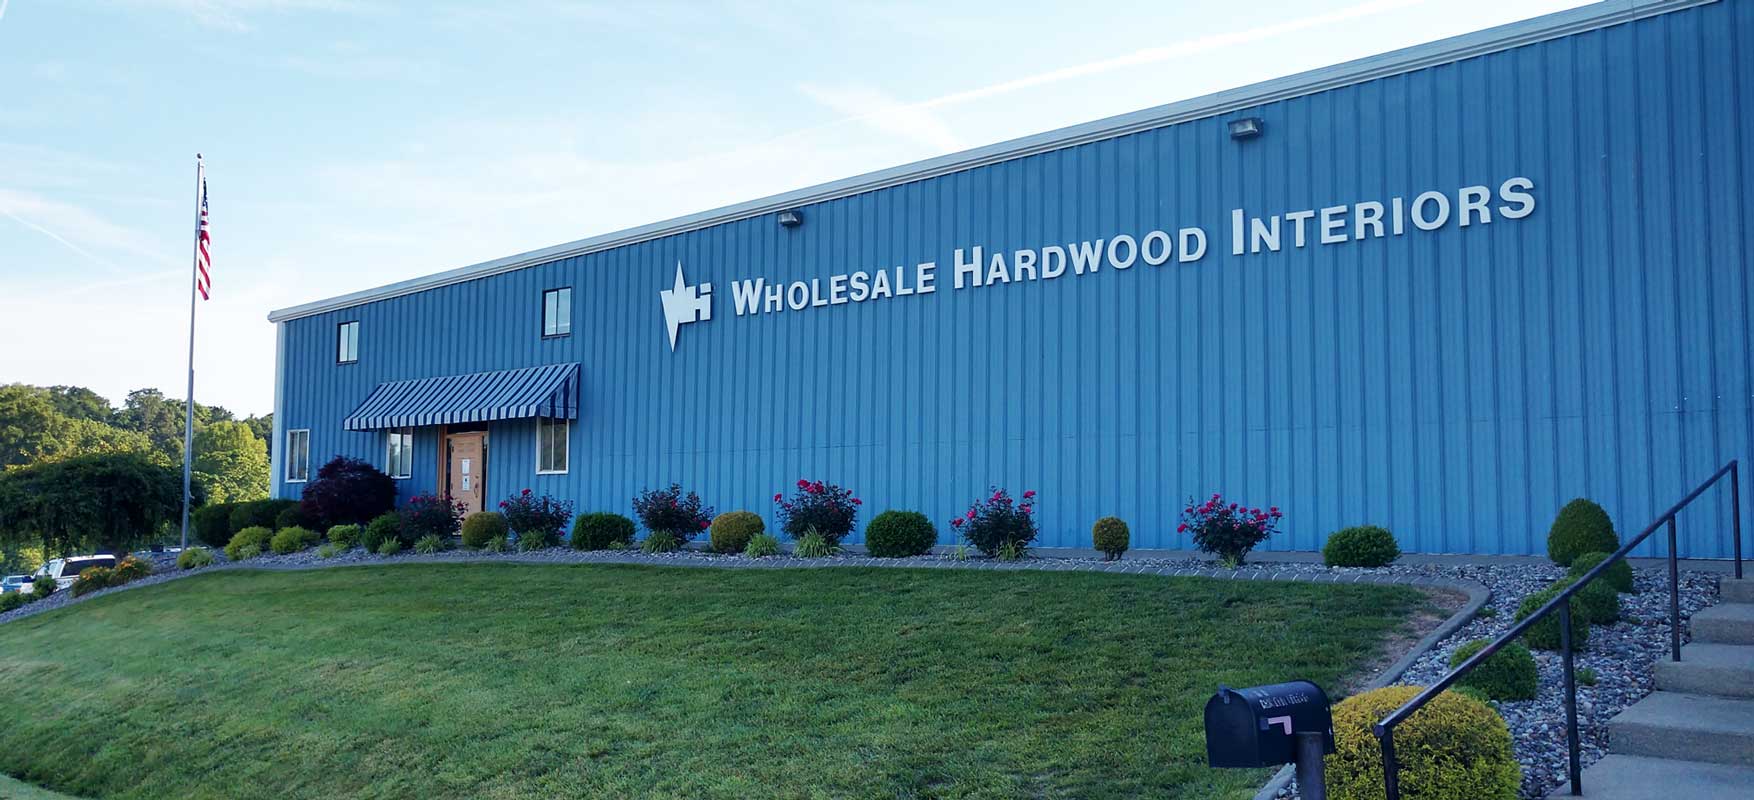 plant wholesale hardwood interiors